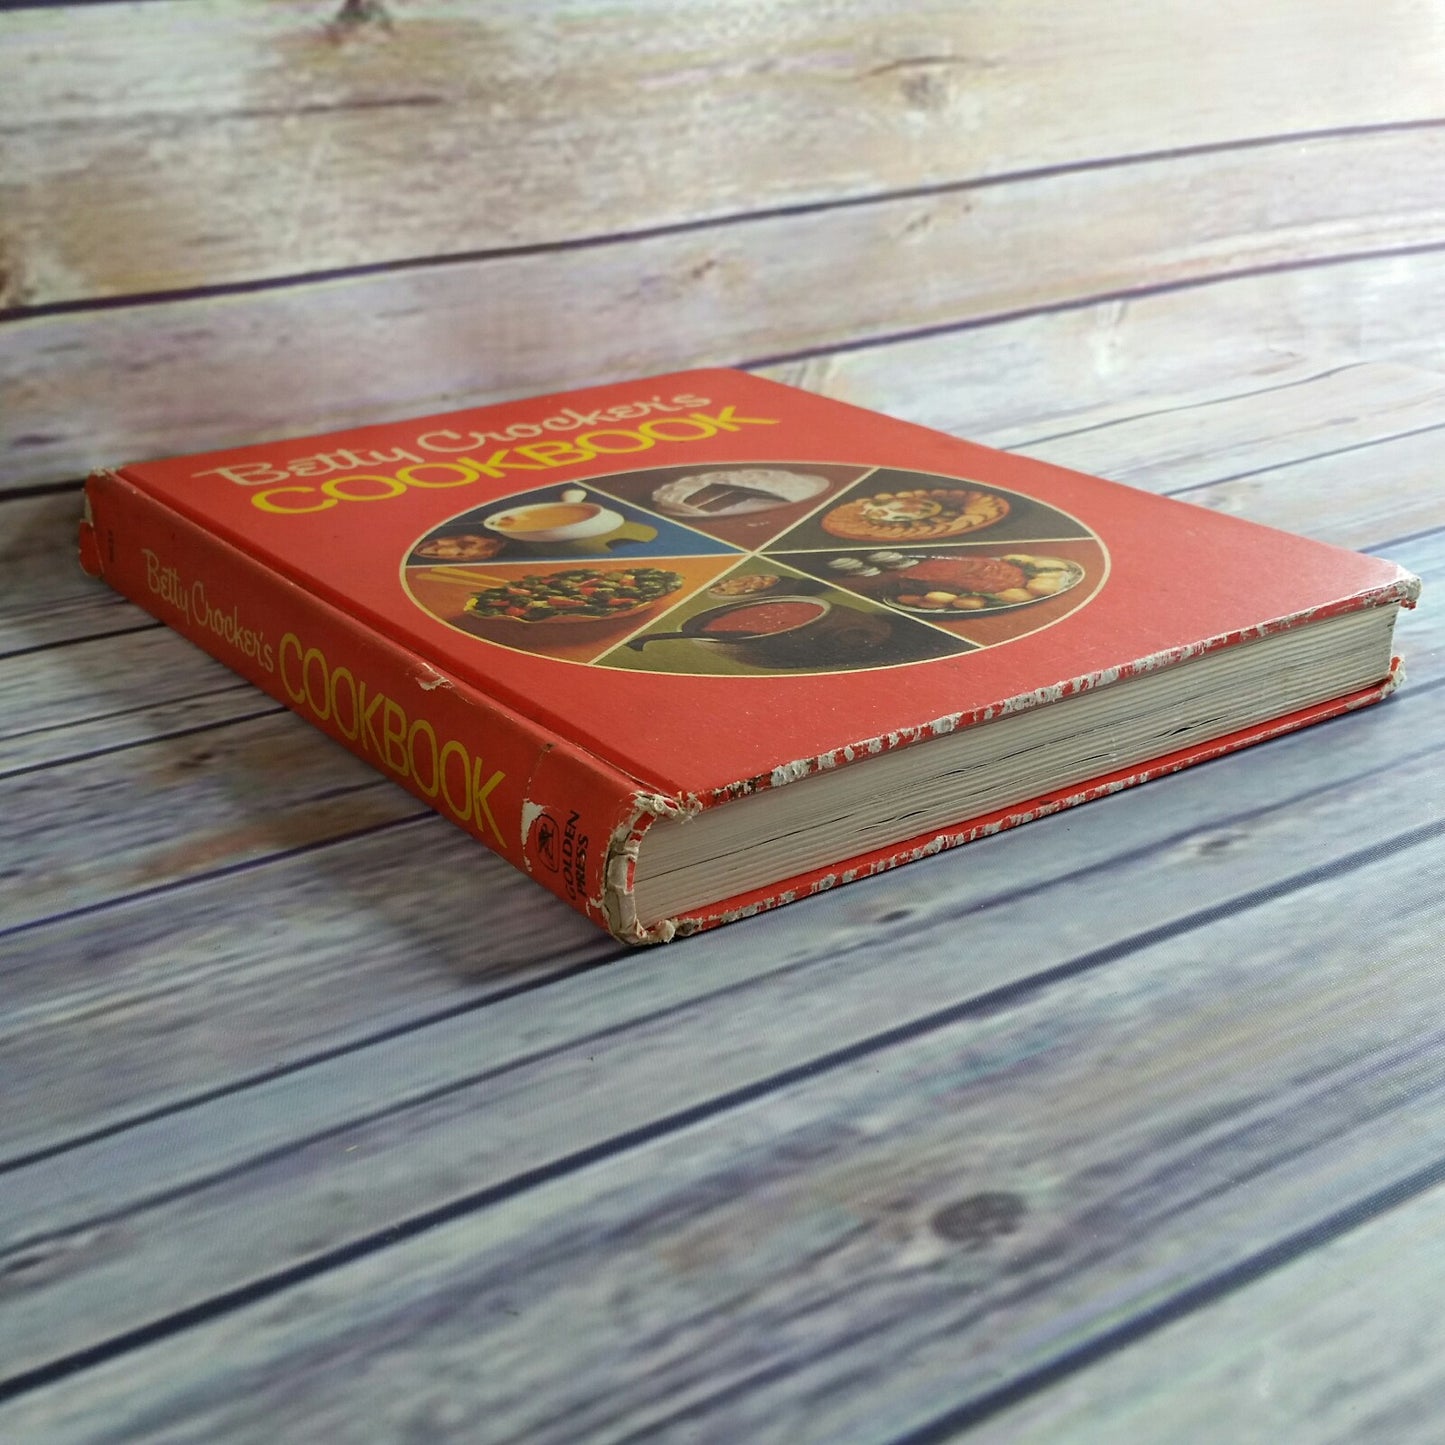 Vintage Cookbook Betty Crocker Red Pie Cover 1973 Recipes Cook Book Hardcover Golden Press